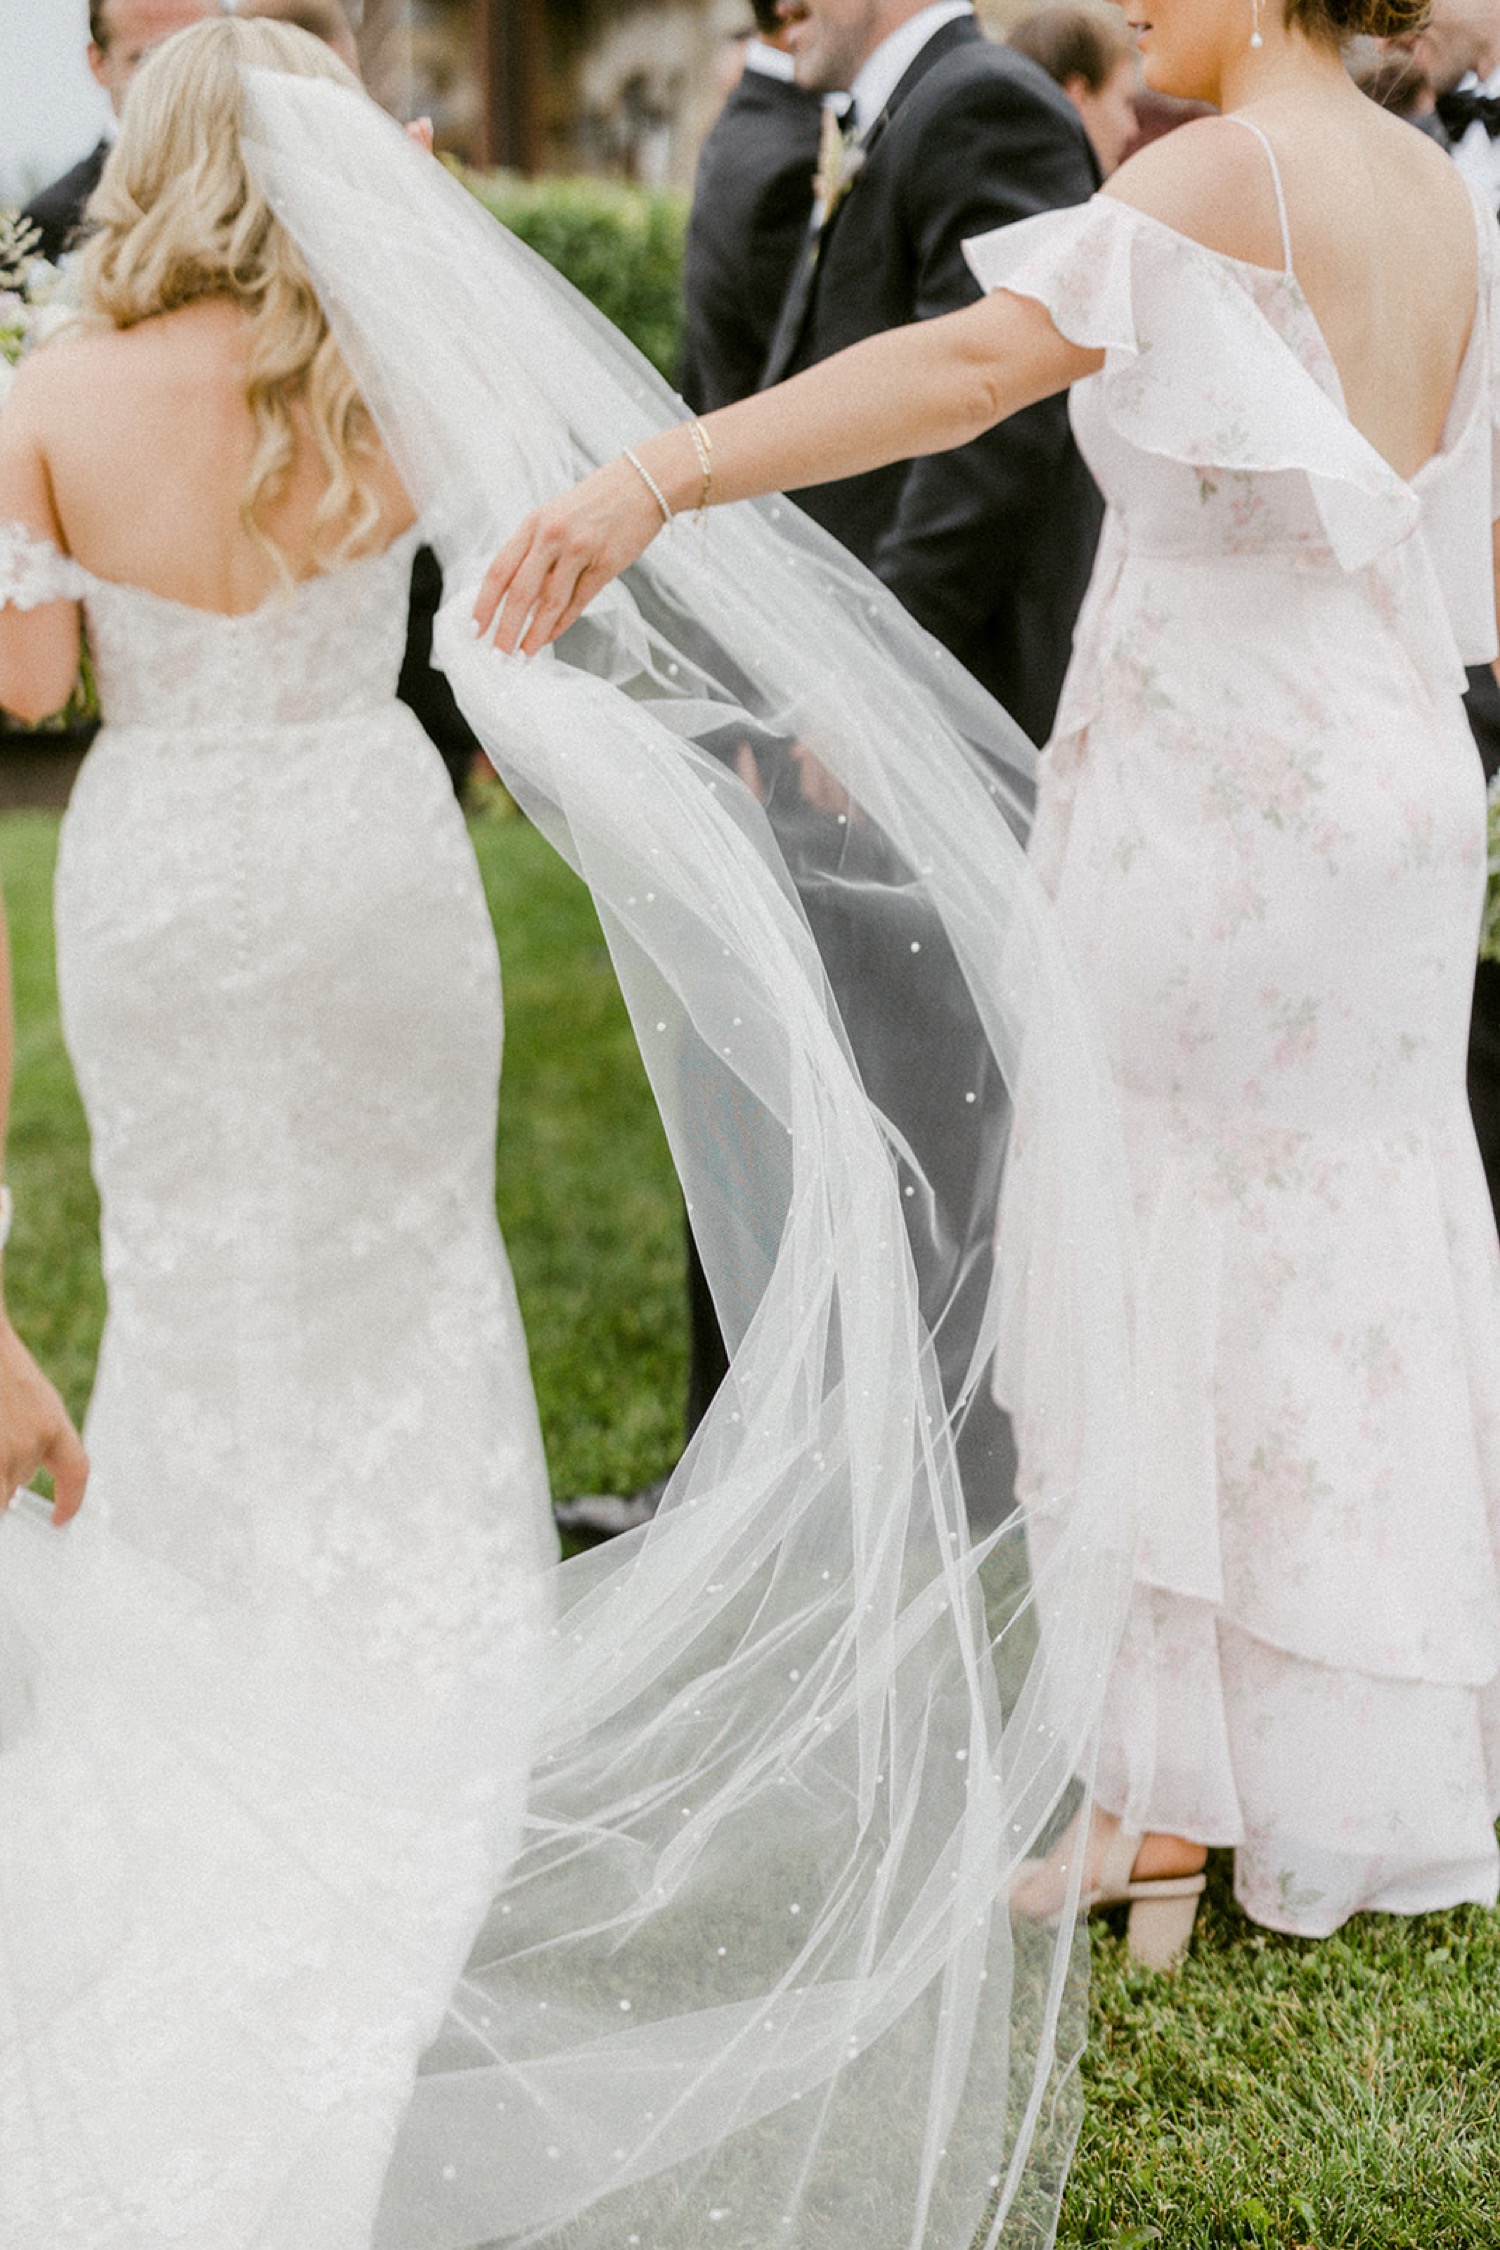 wedding veil blowing in the wind